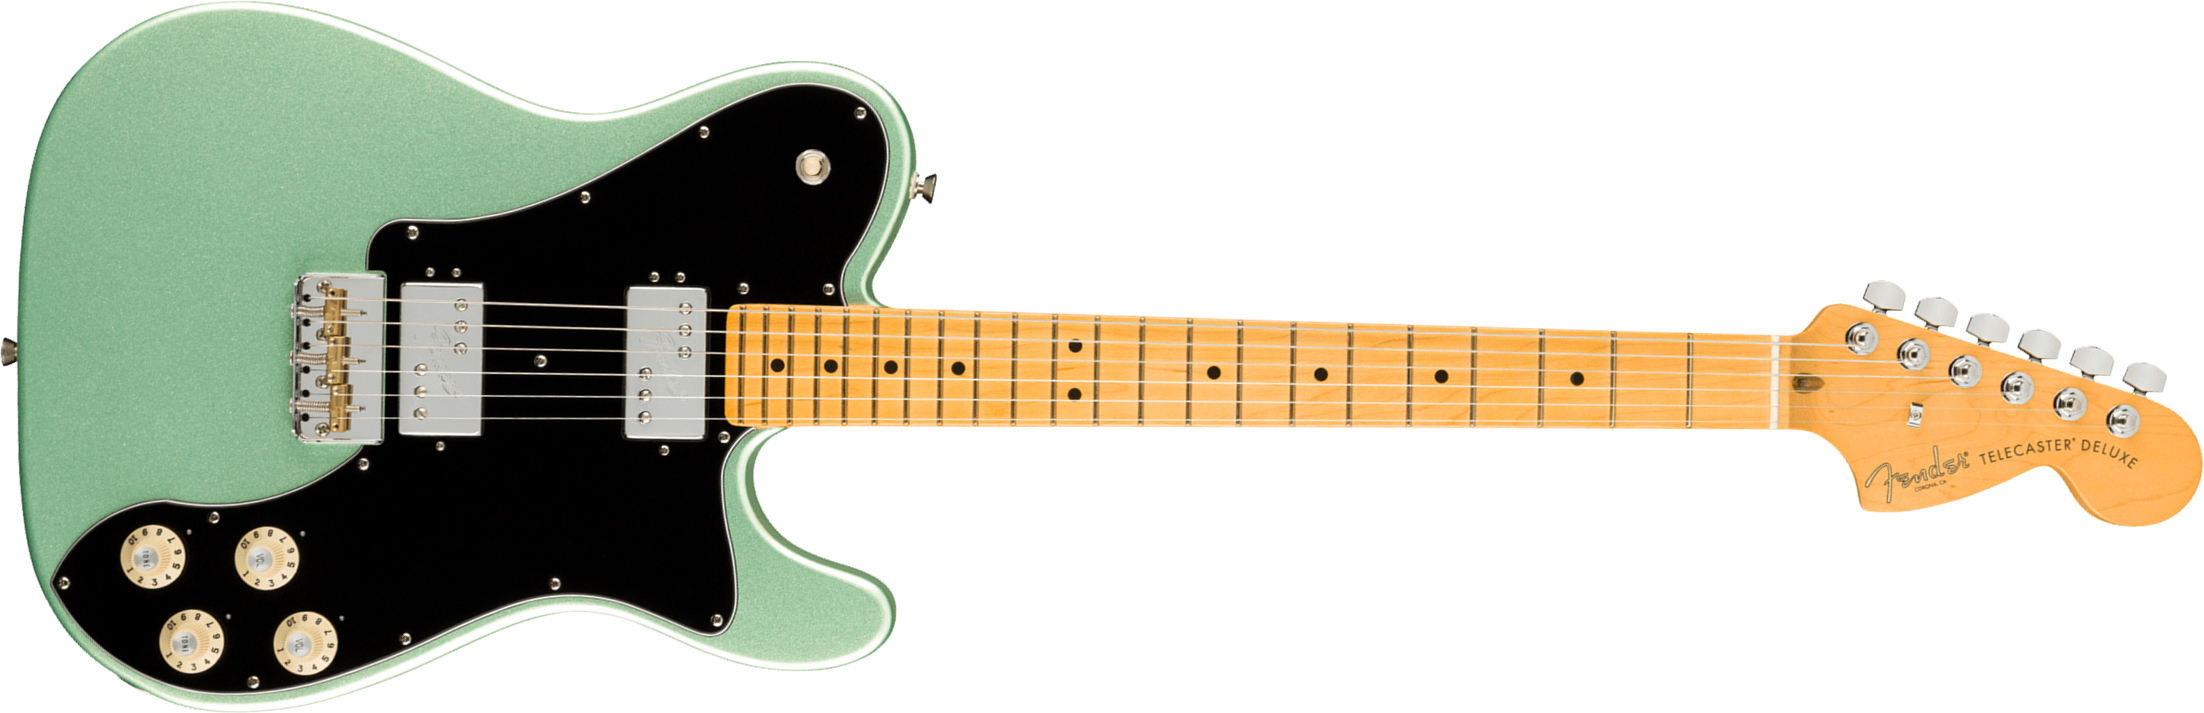 Fender Tele Deluxe American Professional Ii Usa Mn - Mystic Surf Green - Televorm elektrische gitaar - Main picture